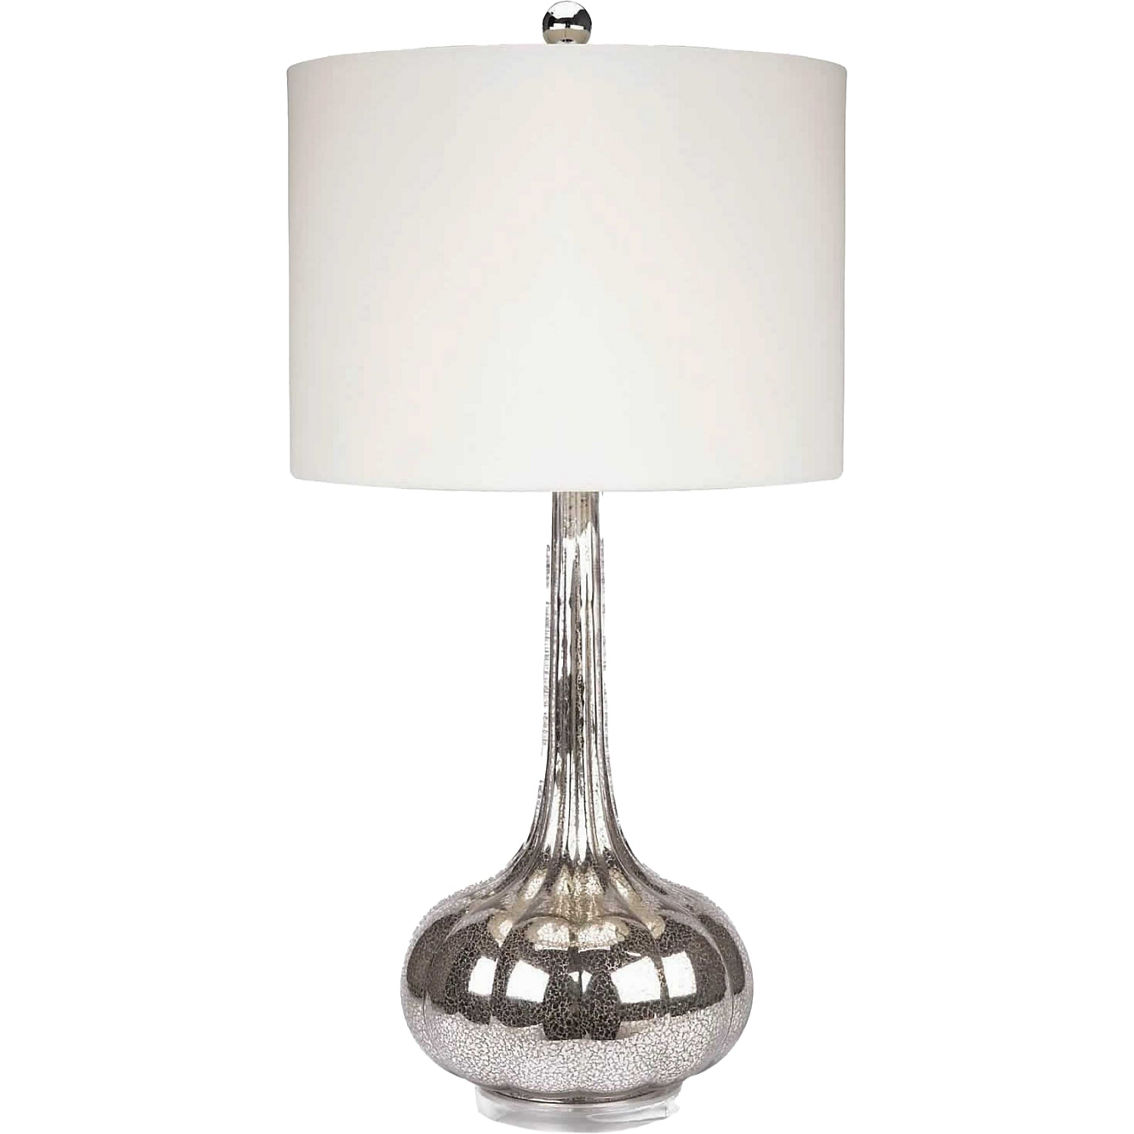 Abbyson Mercury Antiqued Glass Table Lamp Set 2 pc. - Image 3 of 4